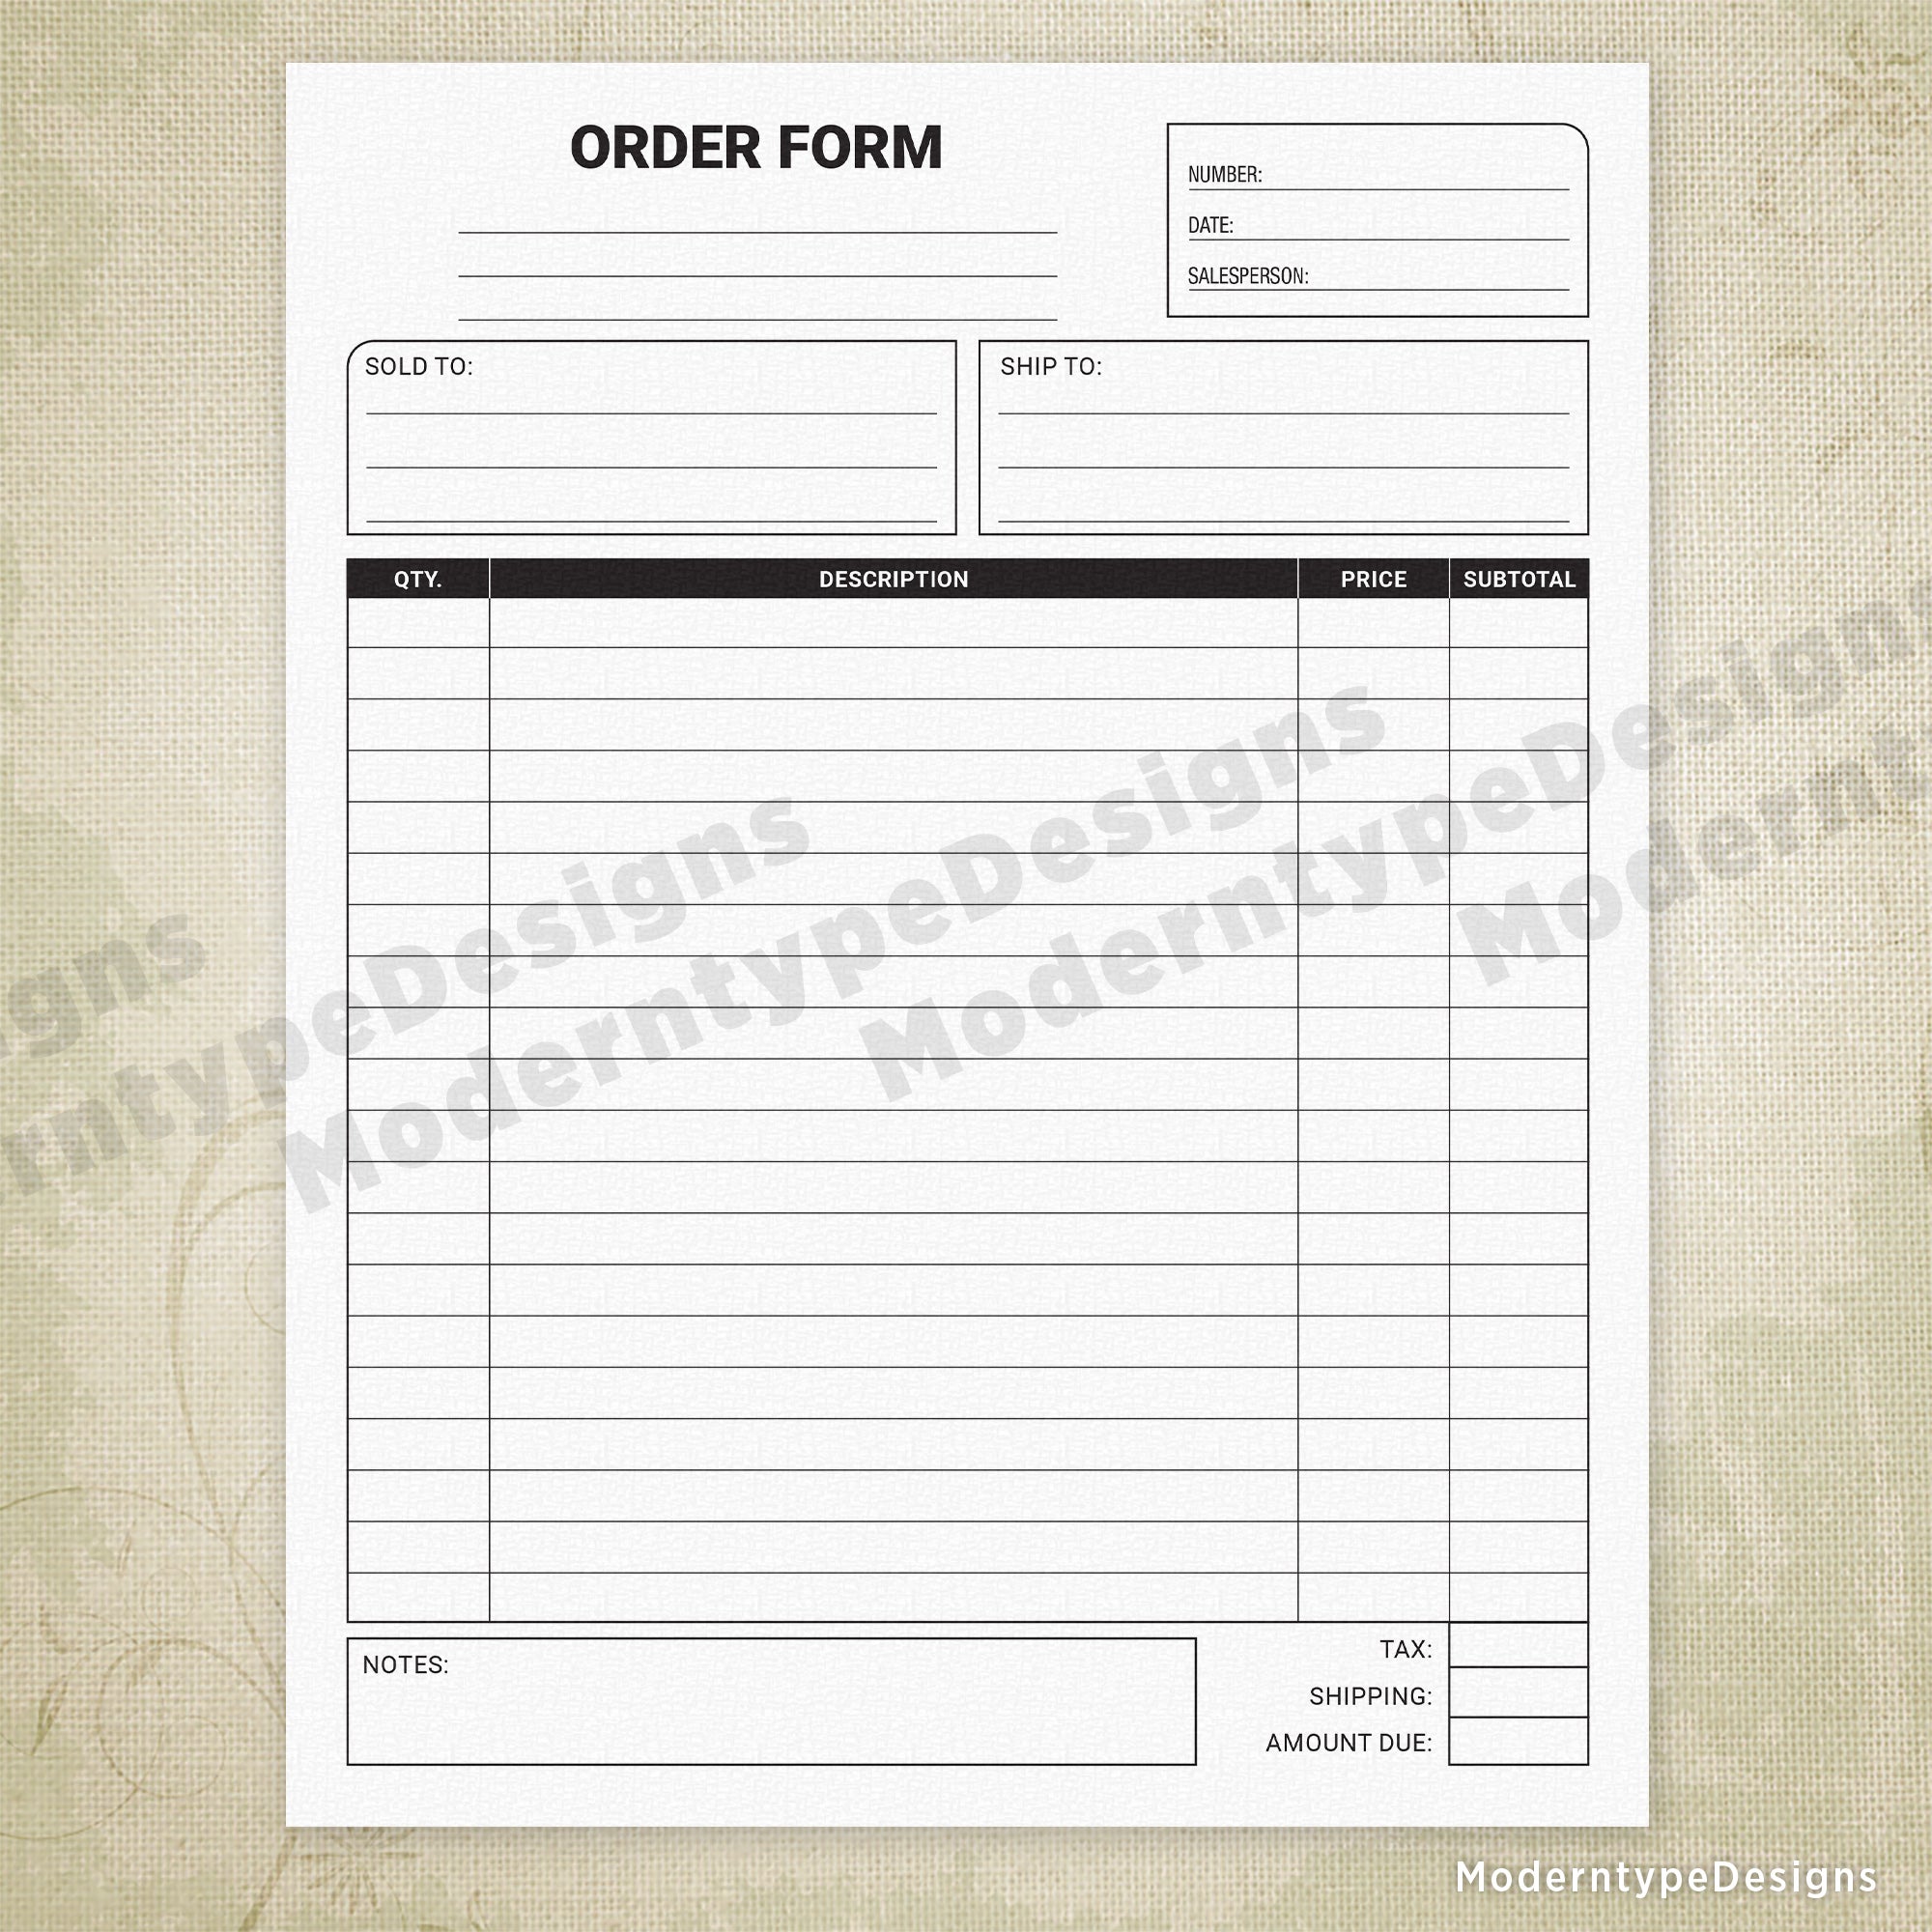 Order Form Printable